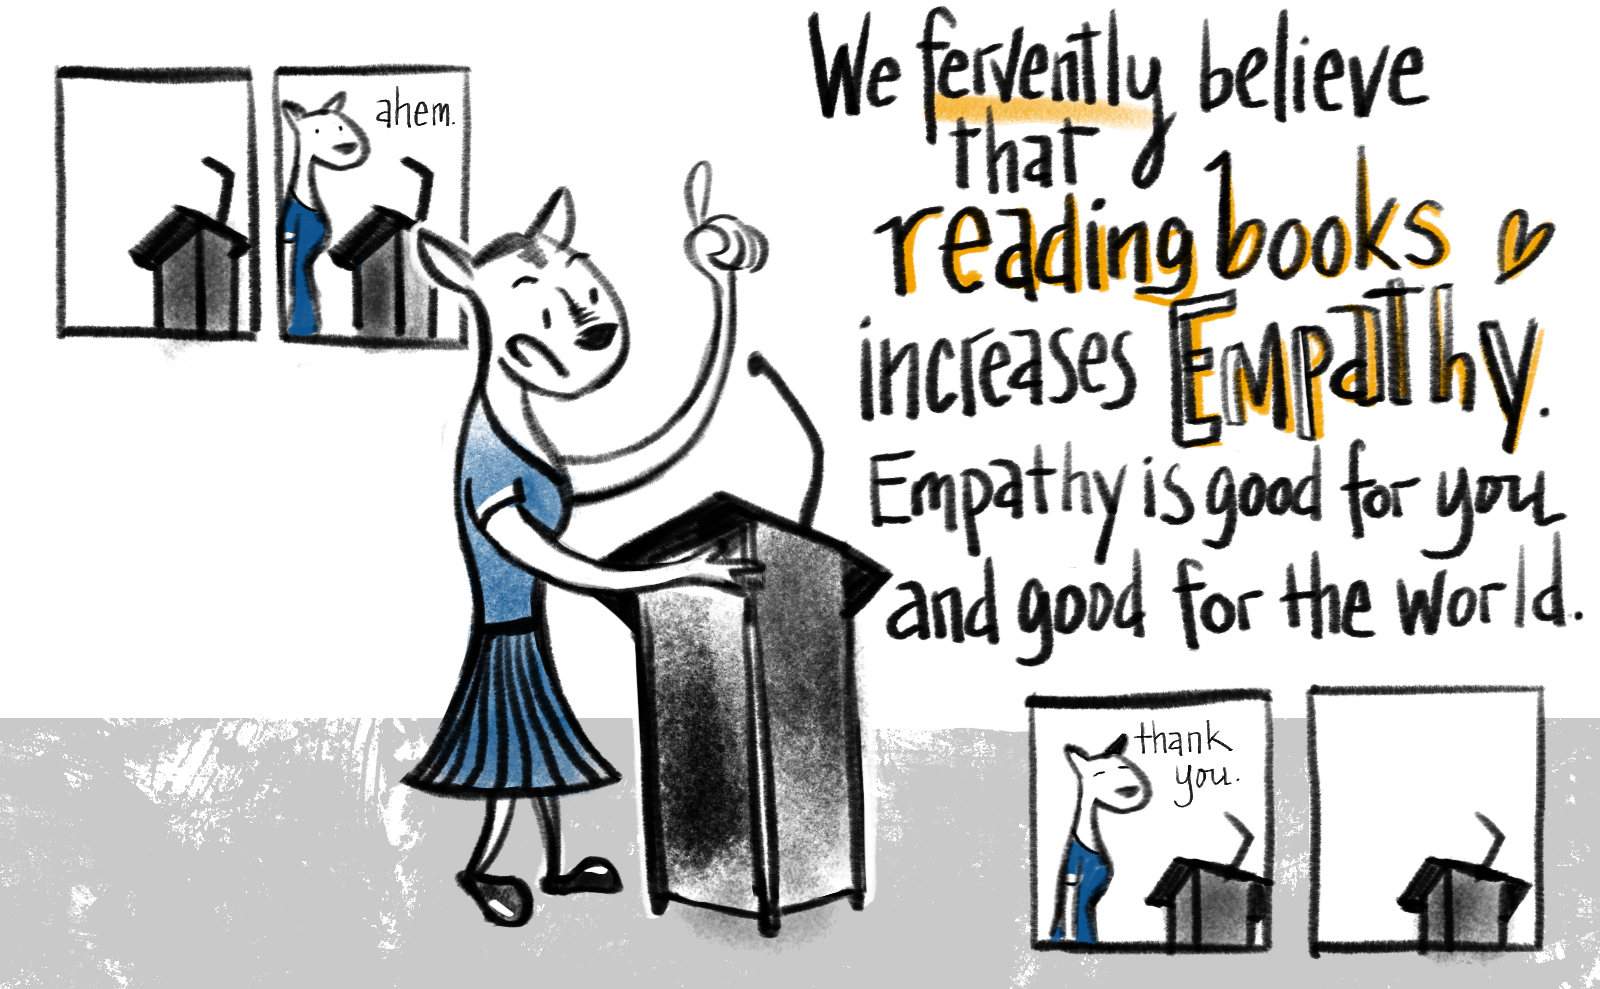 Reading increases empathy.